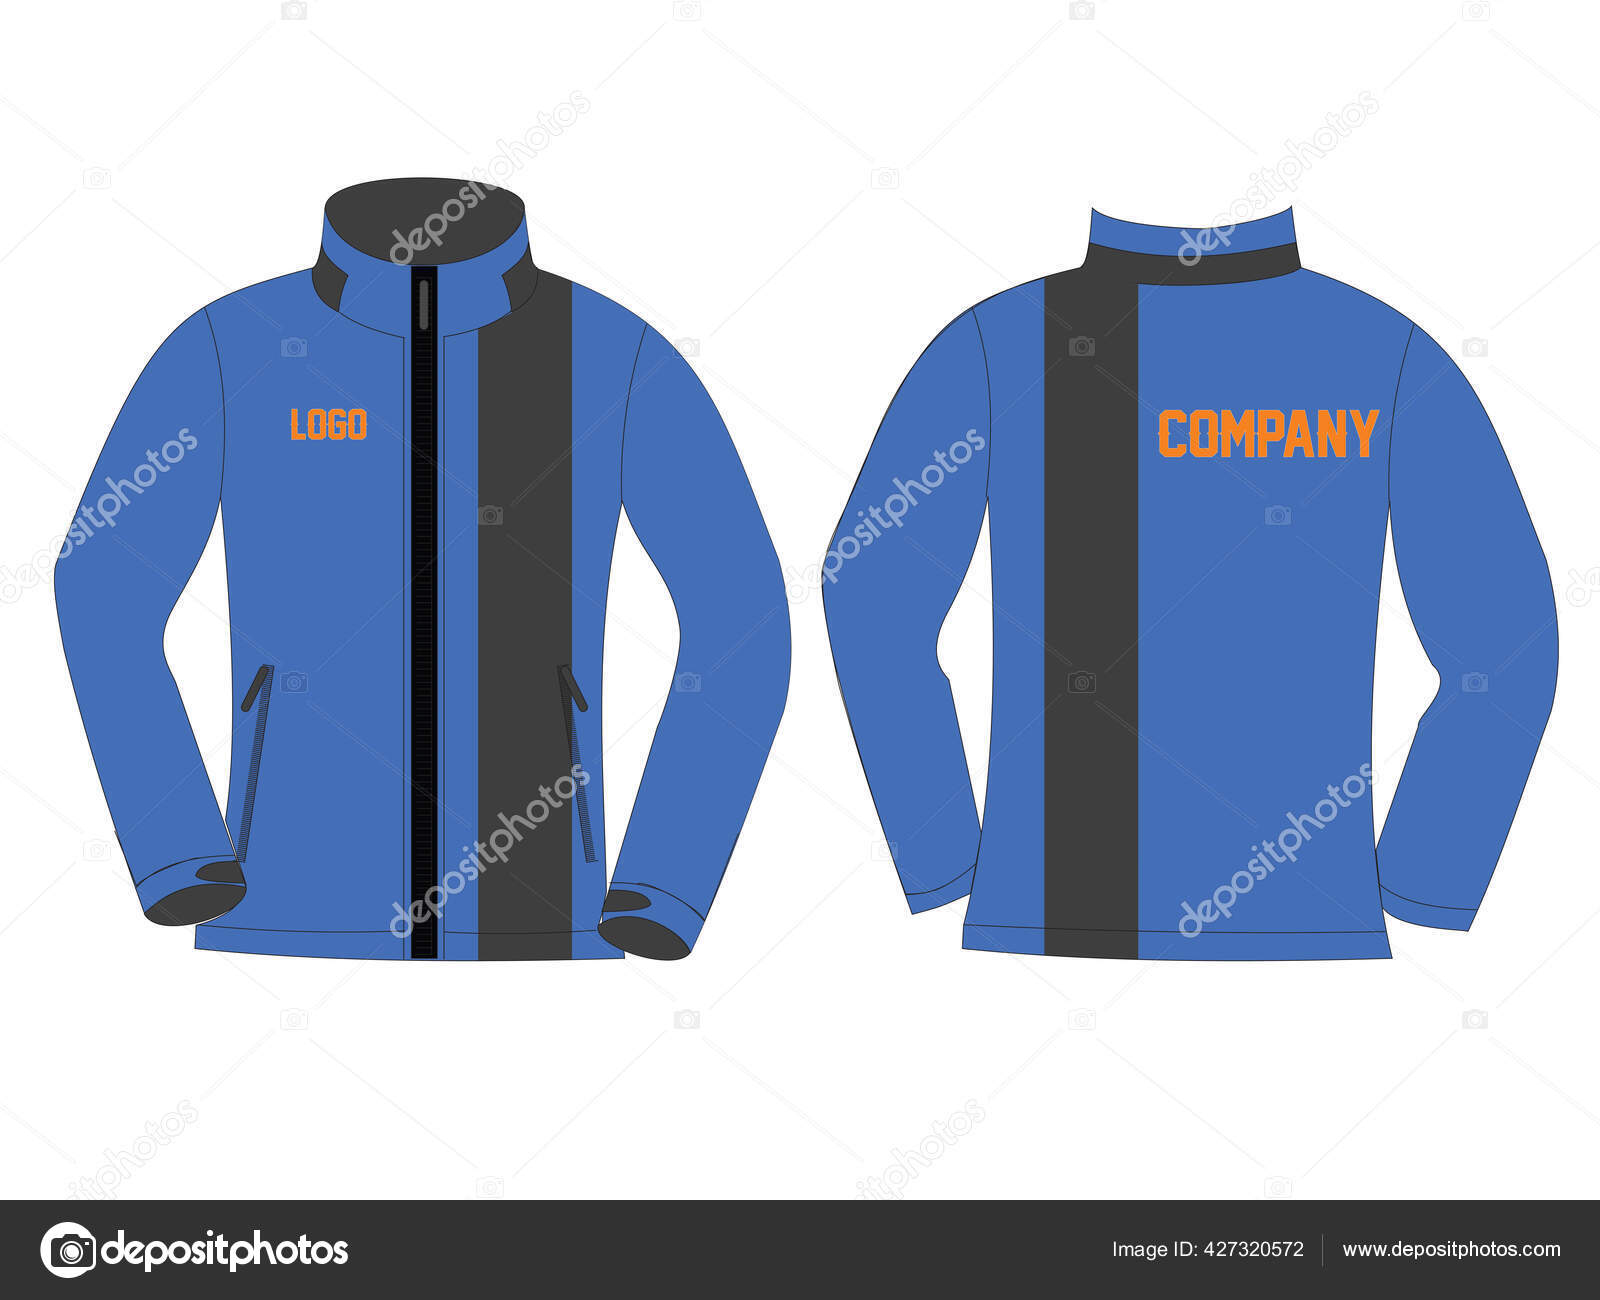 Shell hoodie hooded windbreaker template - Stock Illustration